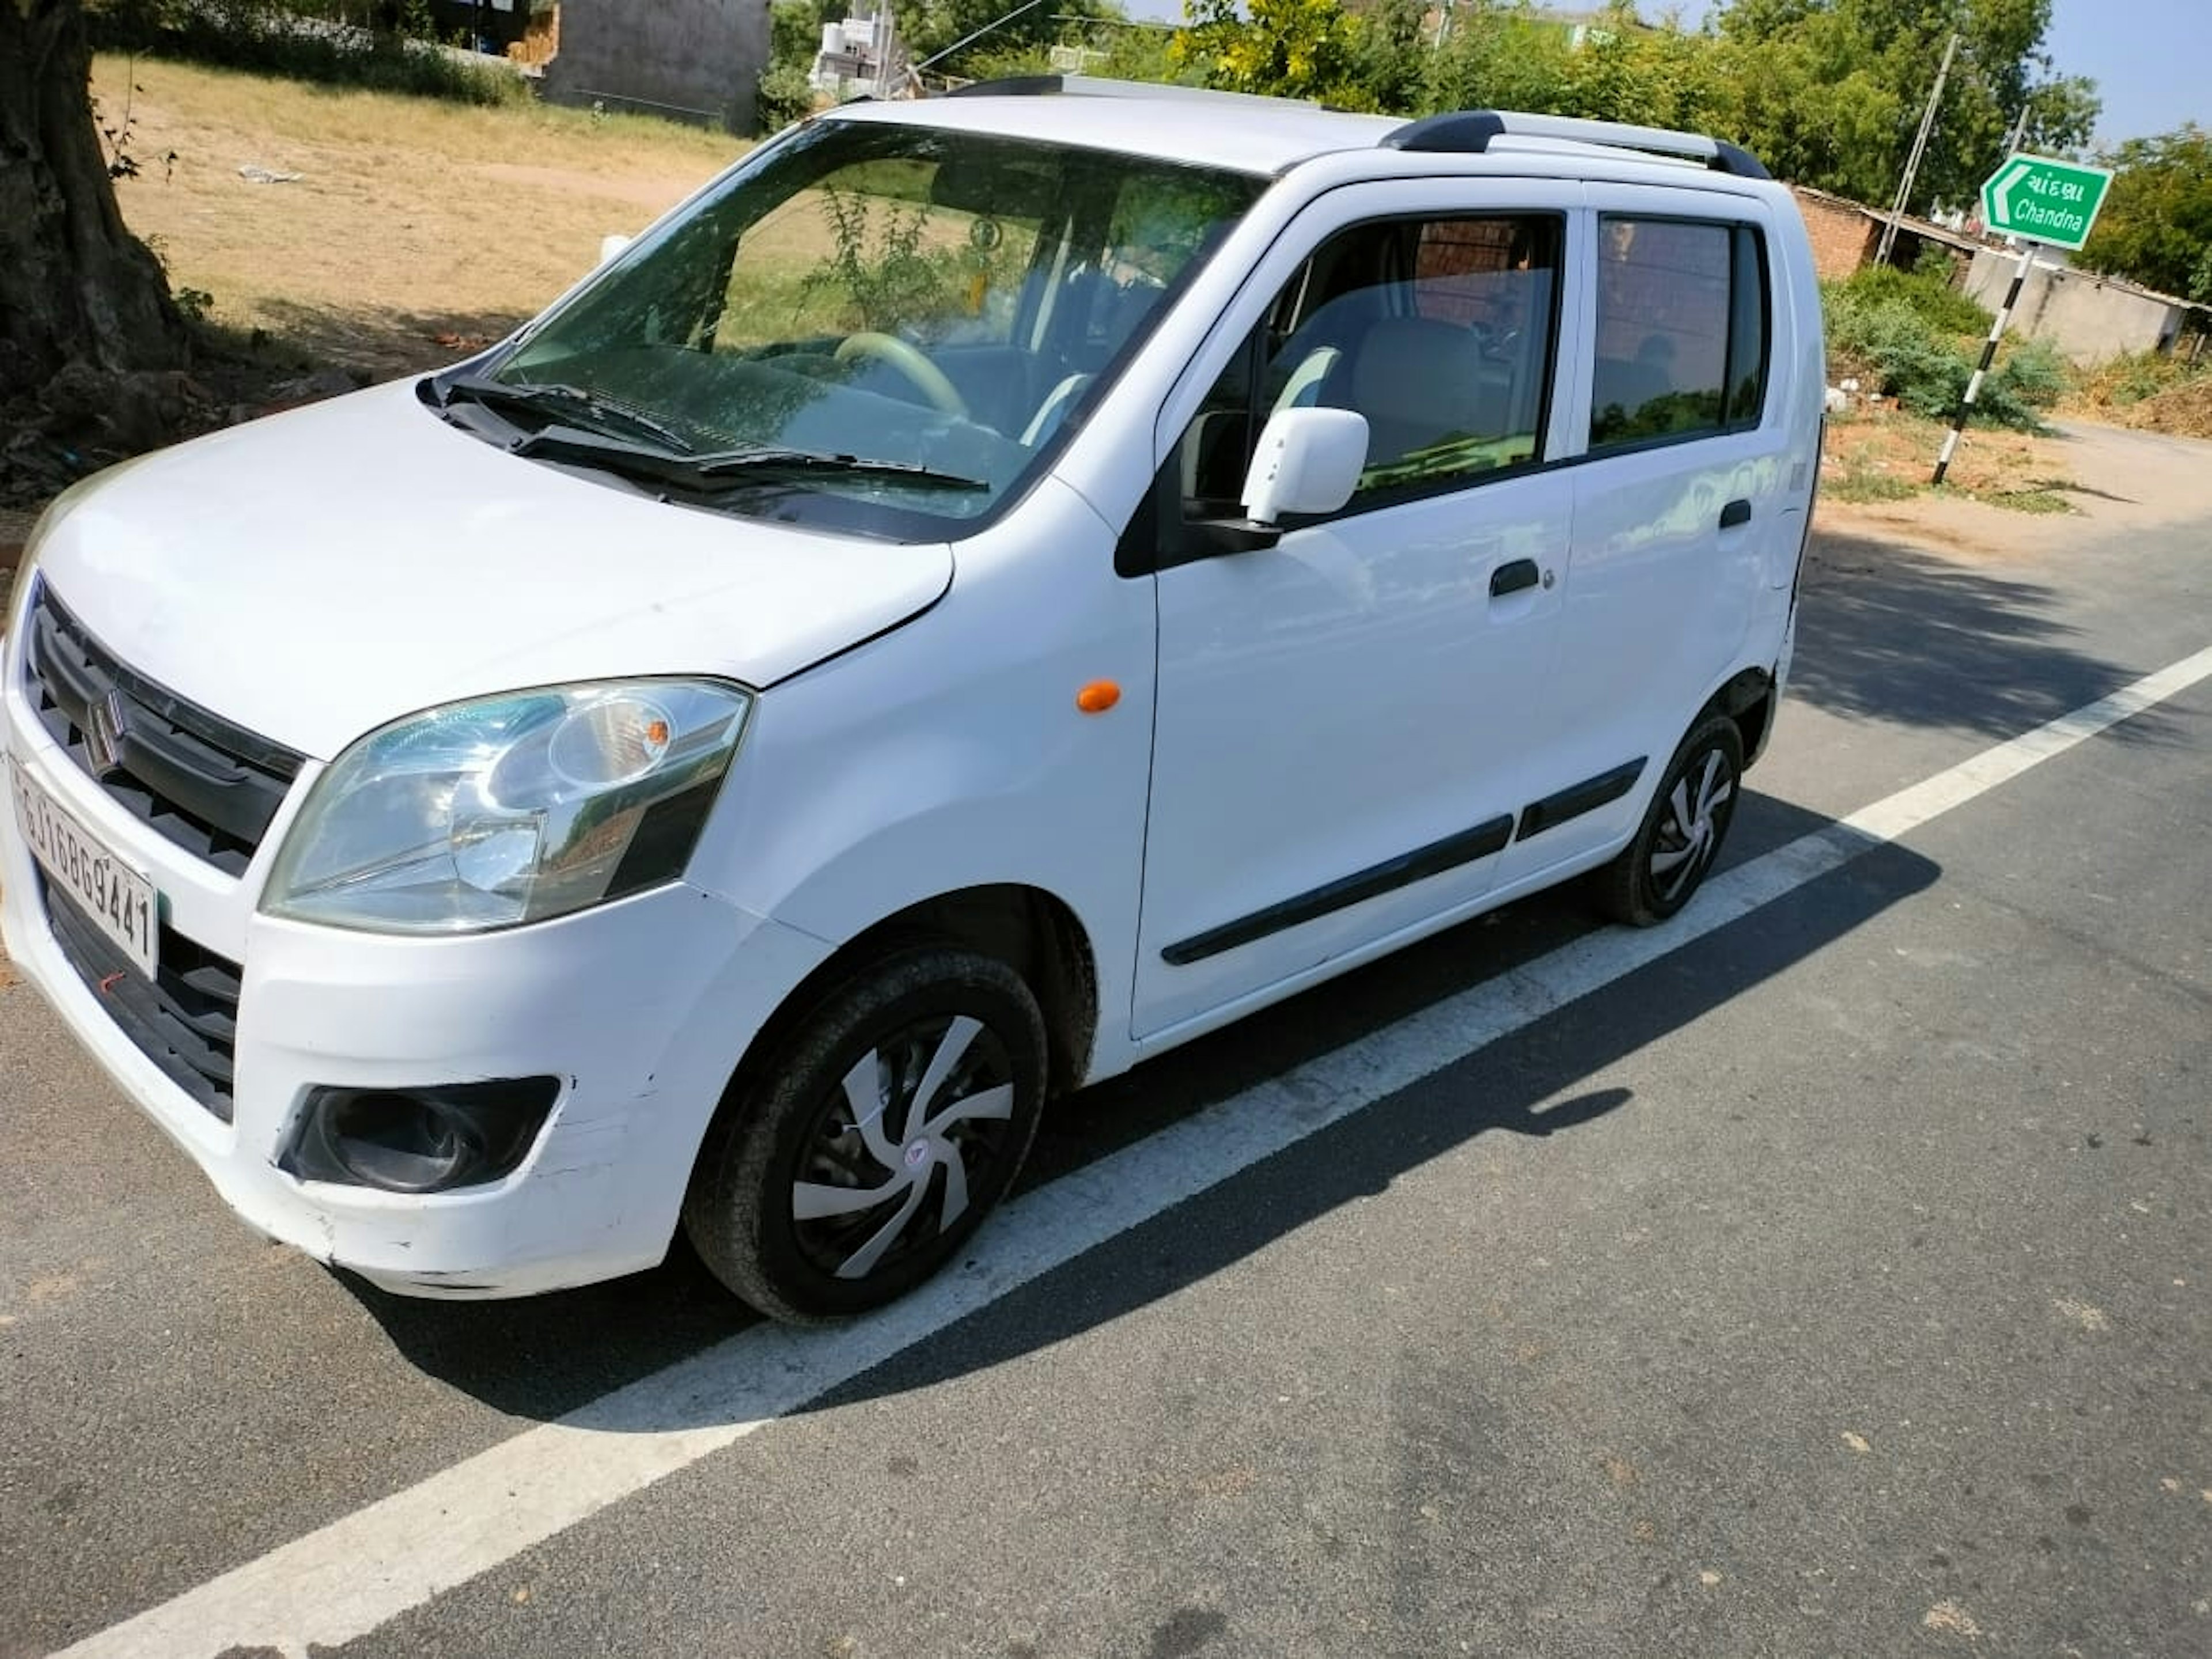 View - Maruti Suzuki wagonr photos, Maruti Suzuki wagonr available in Ahmedabad, make deal in 275000